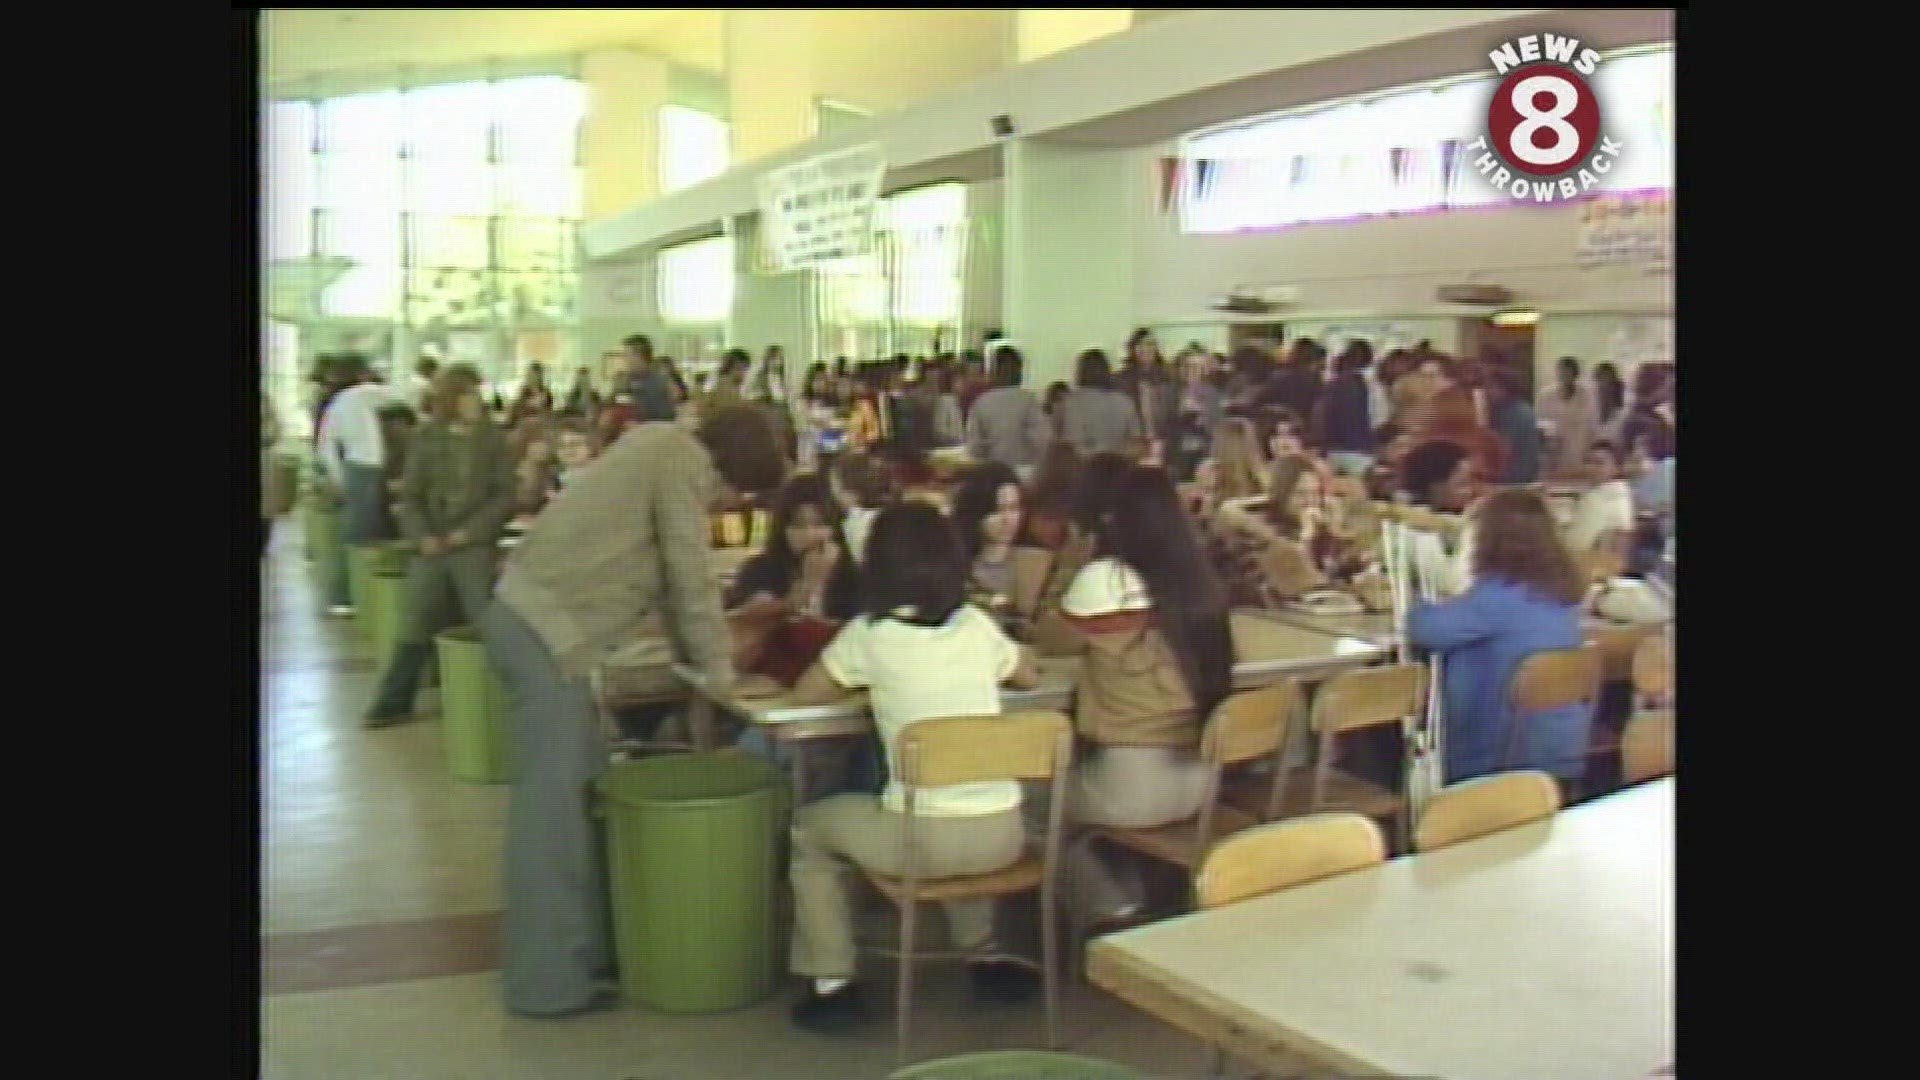 School cafeteria food v fast food 1979